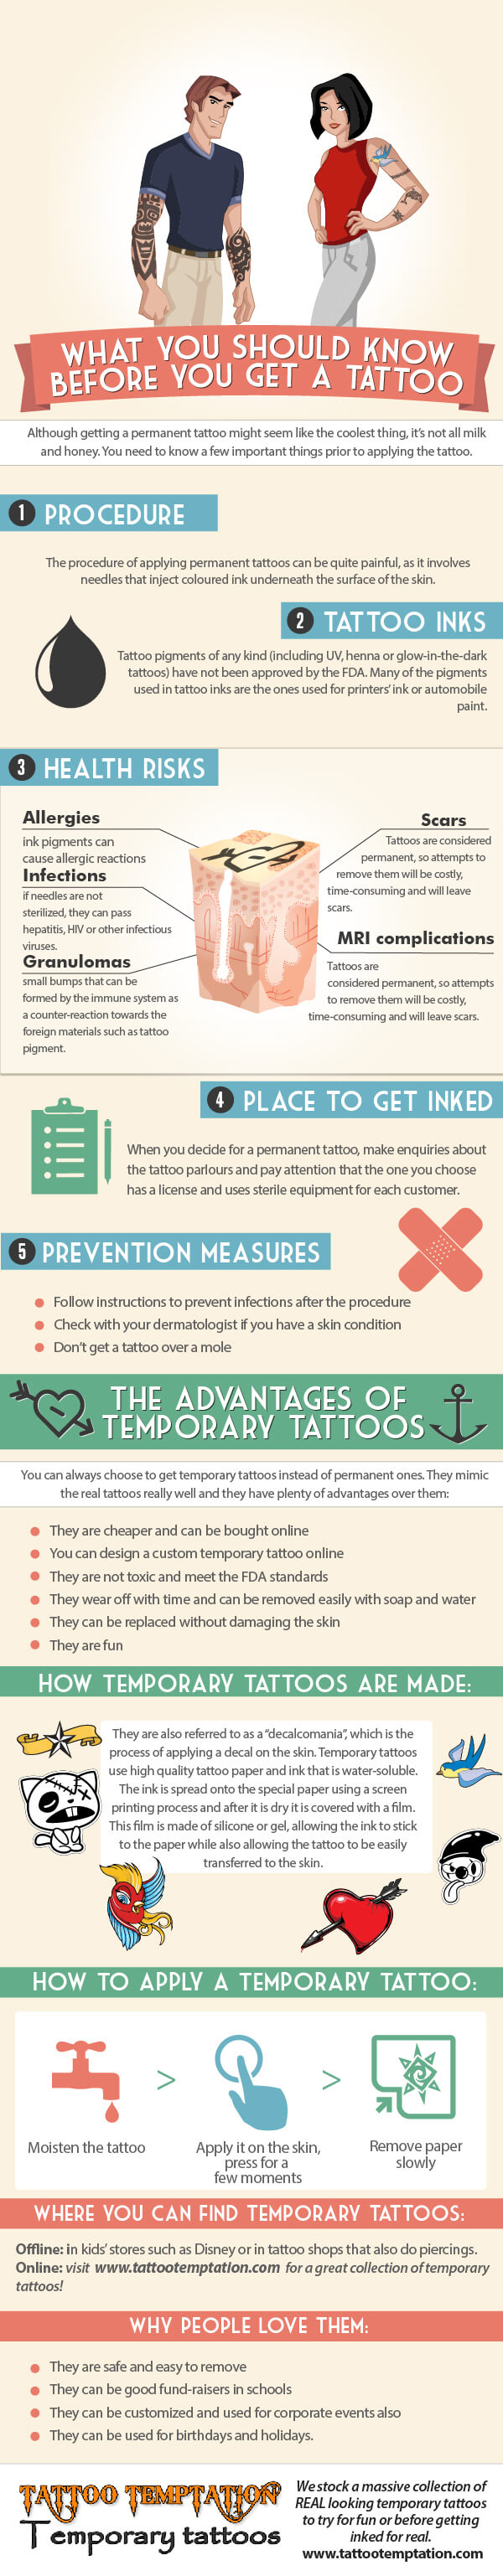 Tattoo-Infographic-web-resolution-01